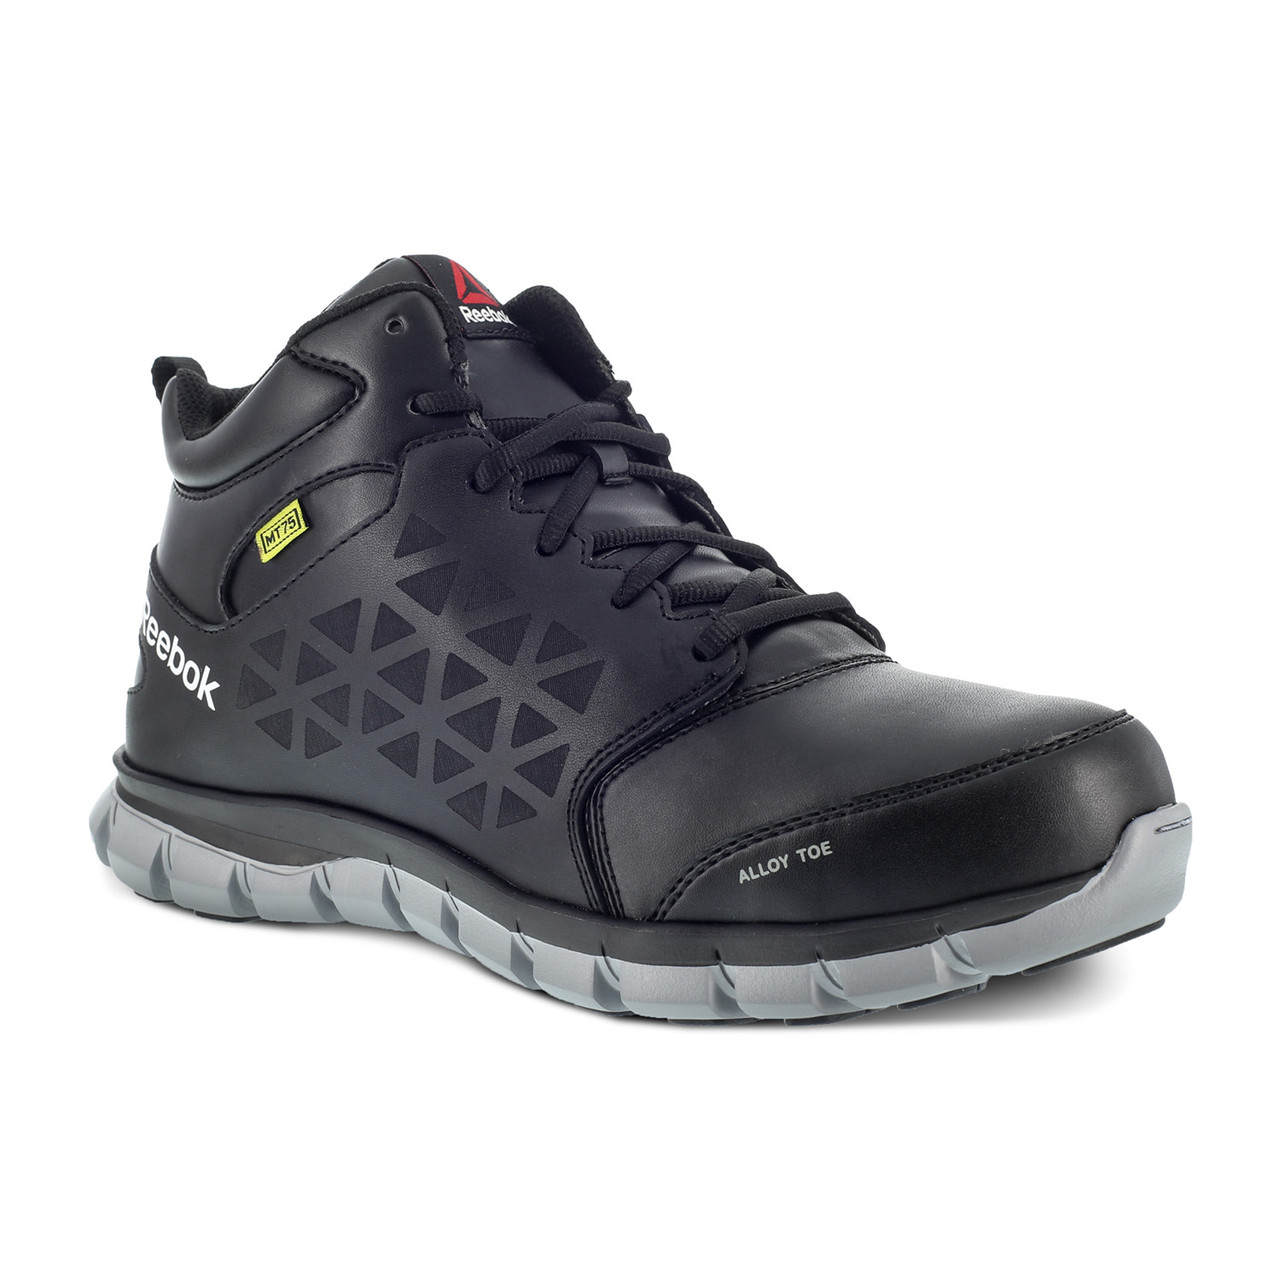 Reebok Shoes: Men's RB4023 Black White Composite Toe Athletic Work Shoe